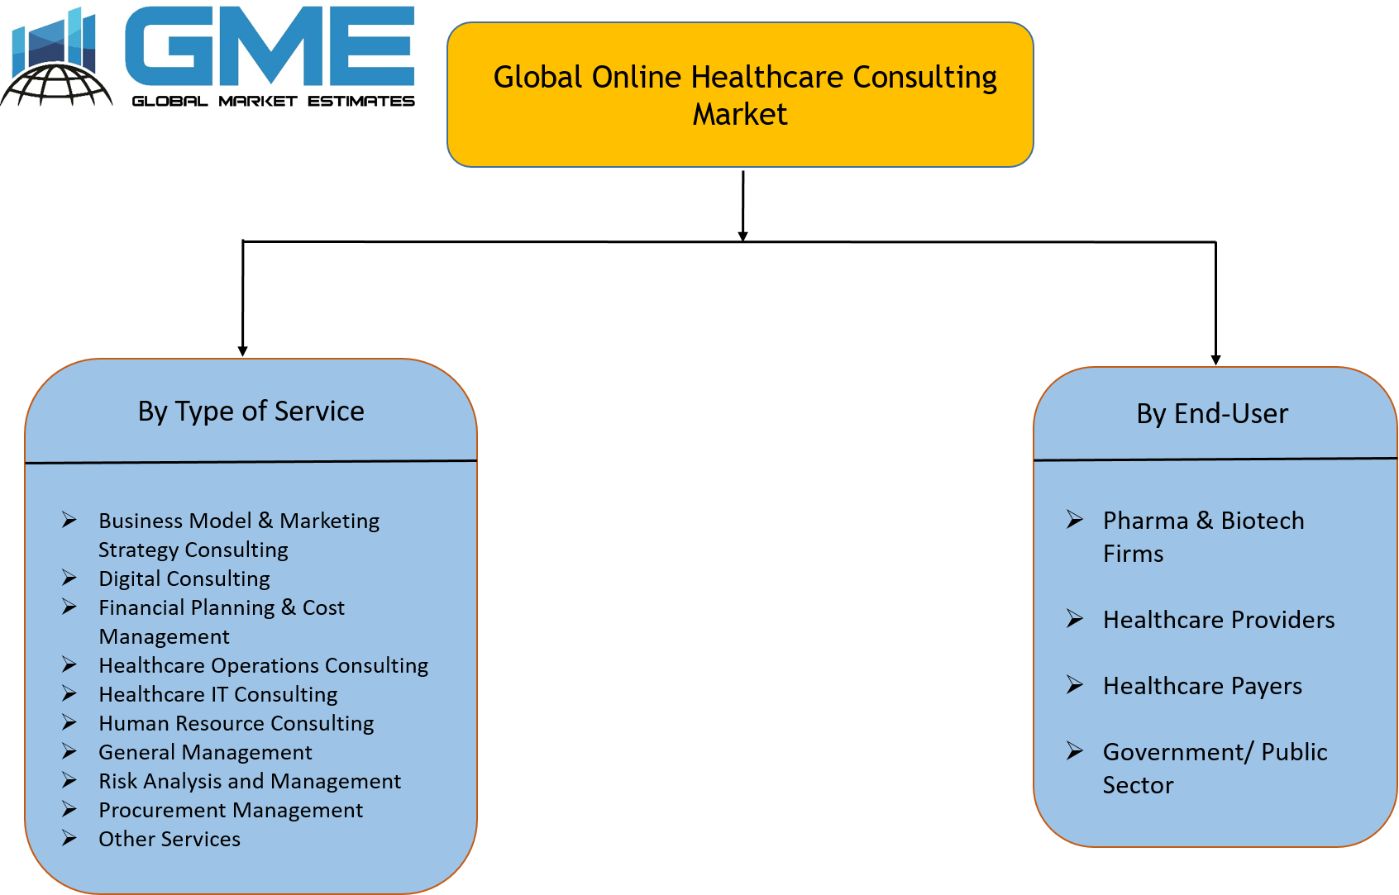 Global Online Healthcare Consulting Market Segmentation